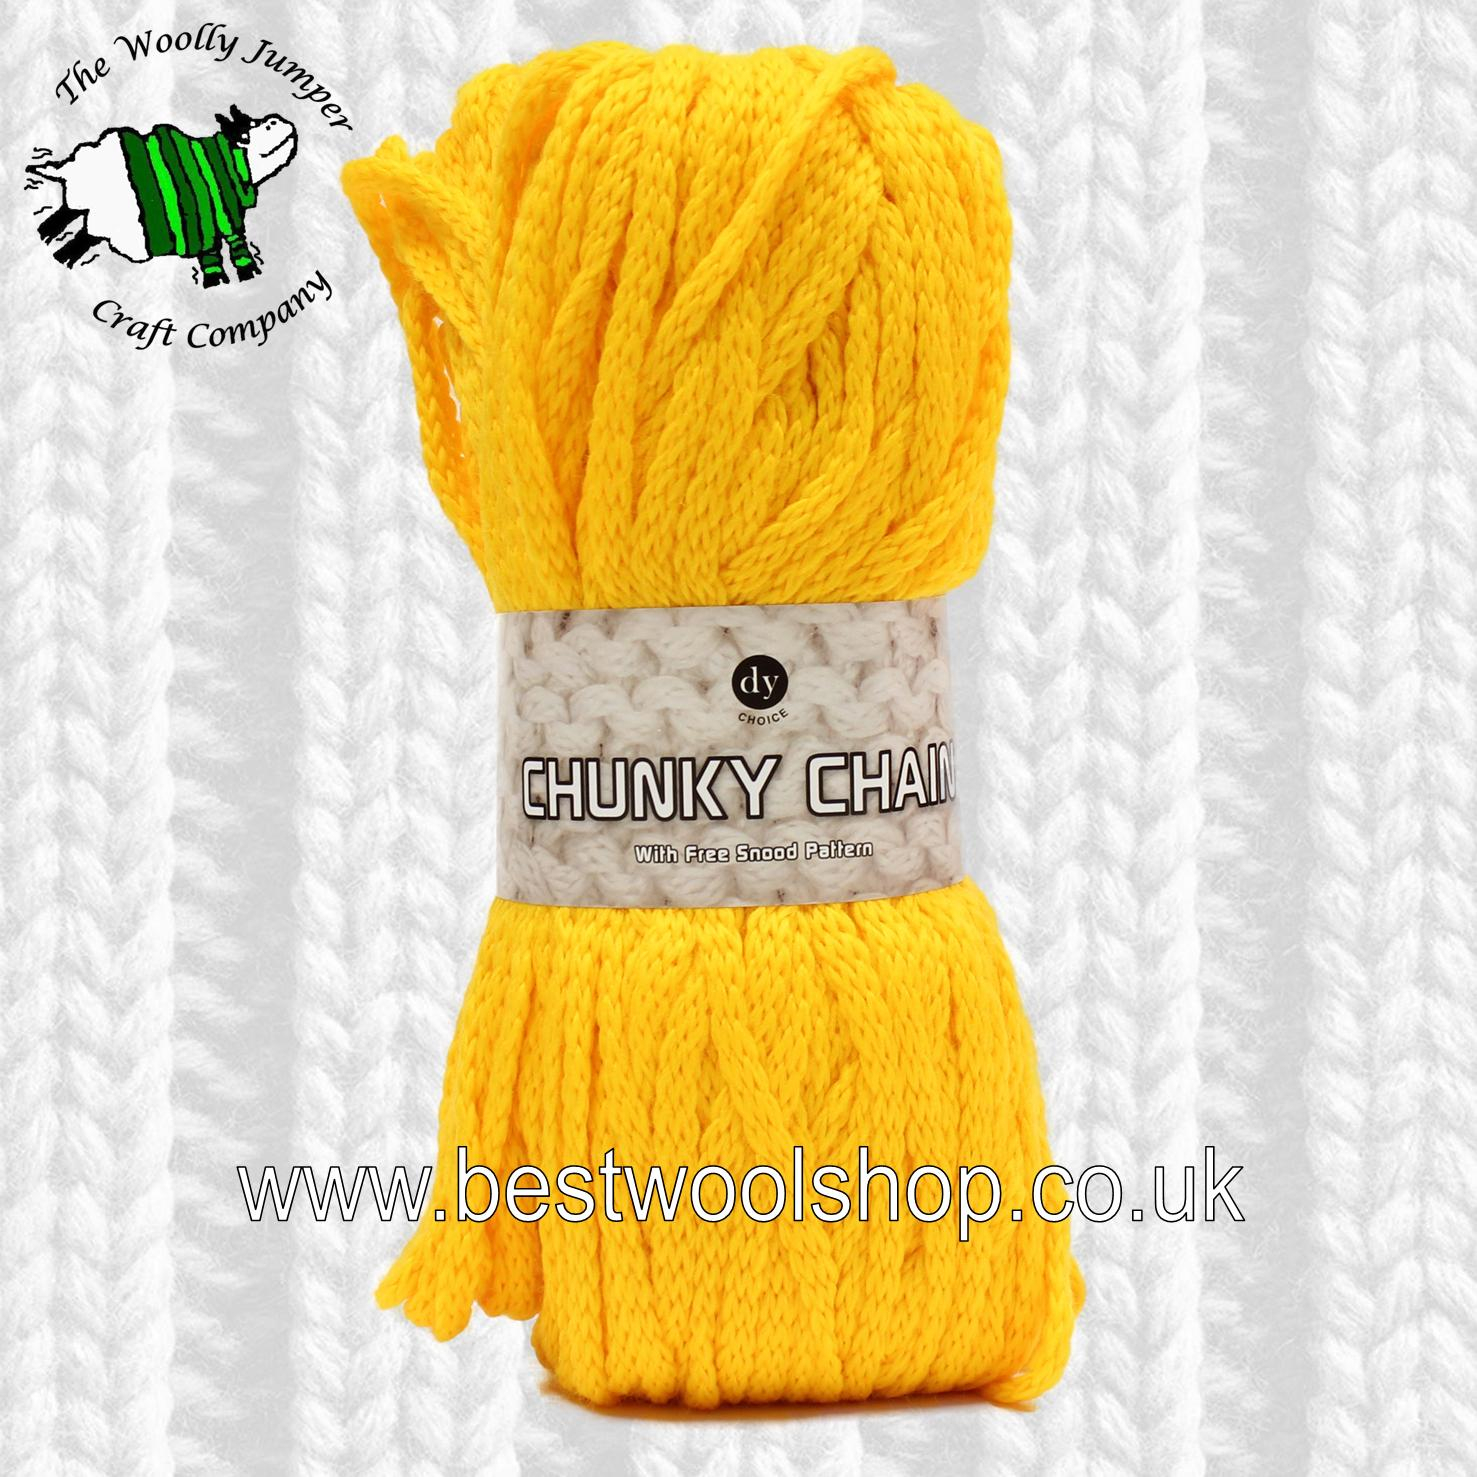 Free Knitting Patterns For Super Chunky Yarn 605 Sunshine Dy Choice Chunky Chain Super Chunky Knitting Crochet Yarn From Designer Yarns With Free Snood Knitting Pattern